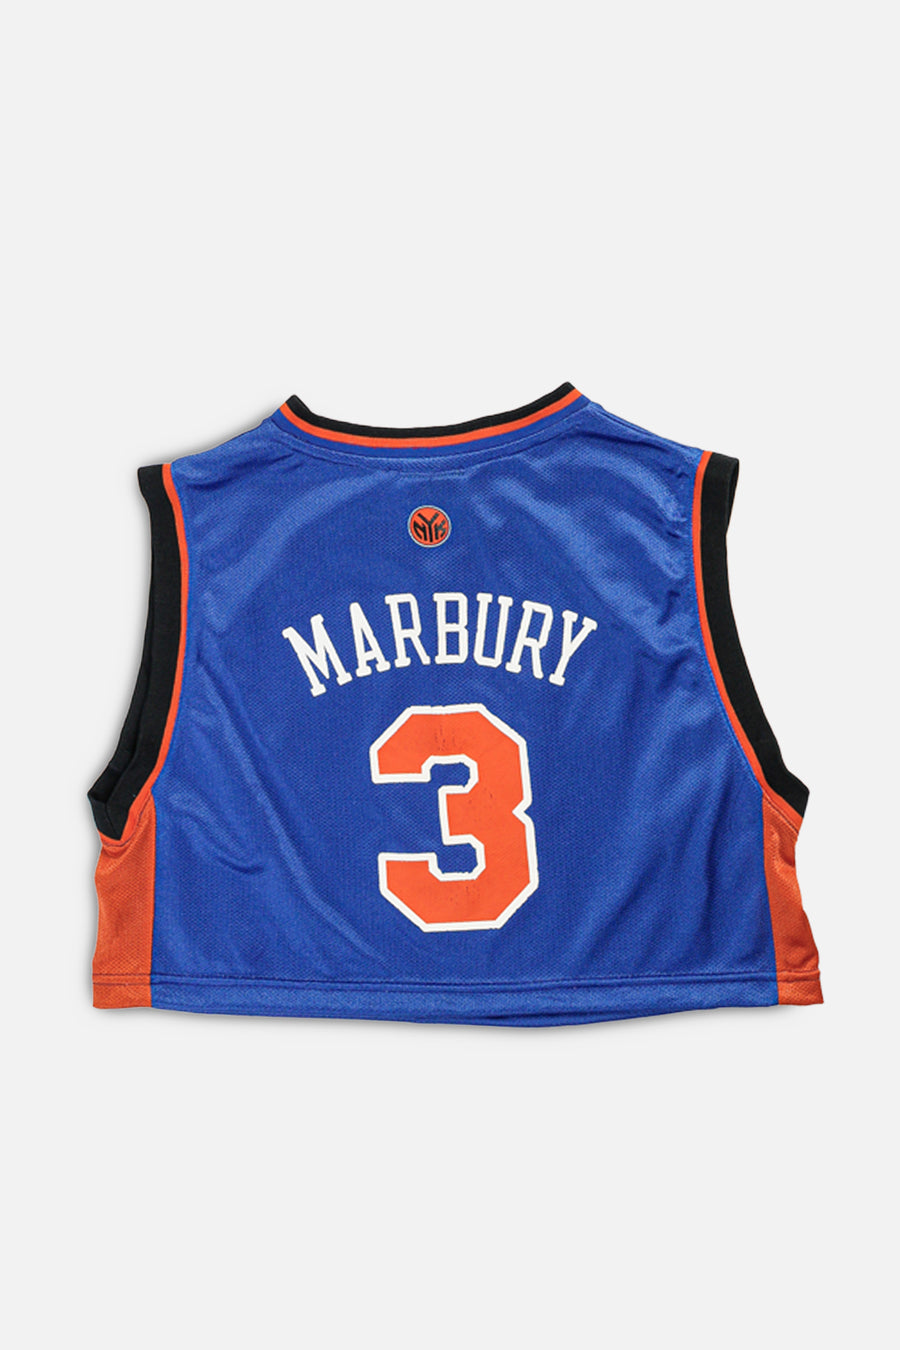 Rework NY Knicks NBA Crop Jersey - M